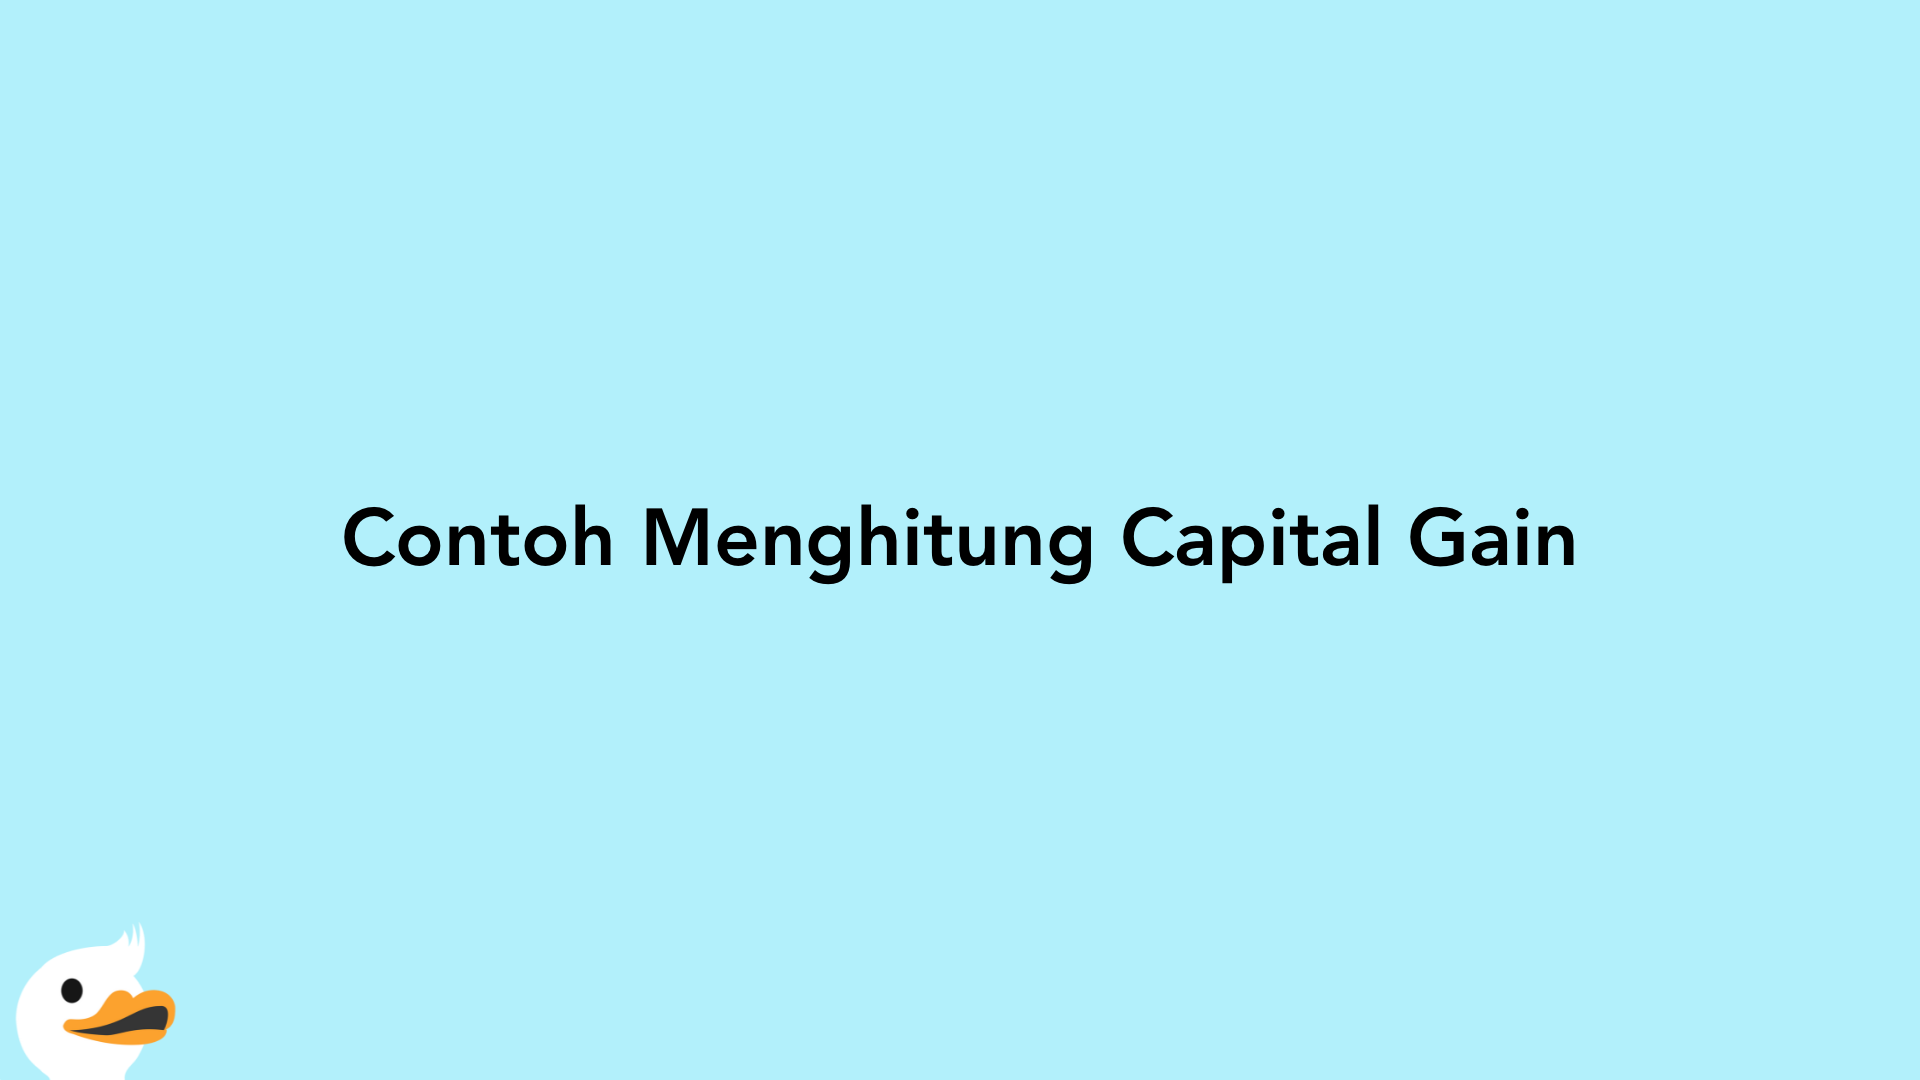 Contoh Menghitung Capital Gain